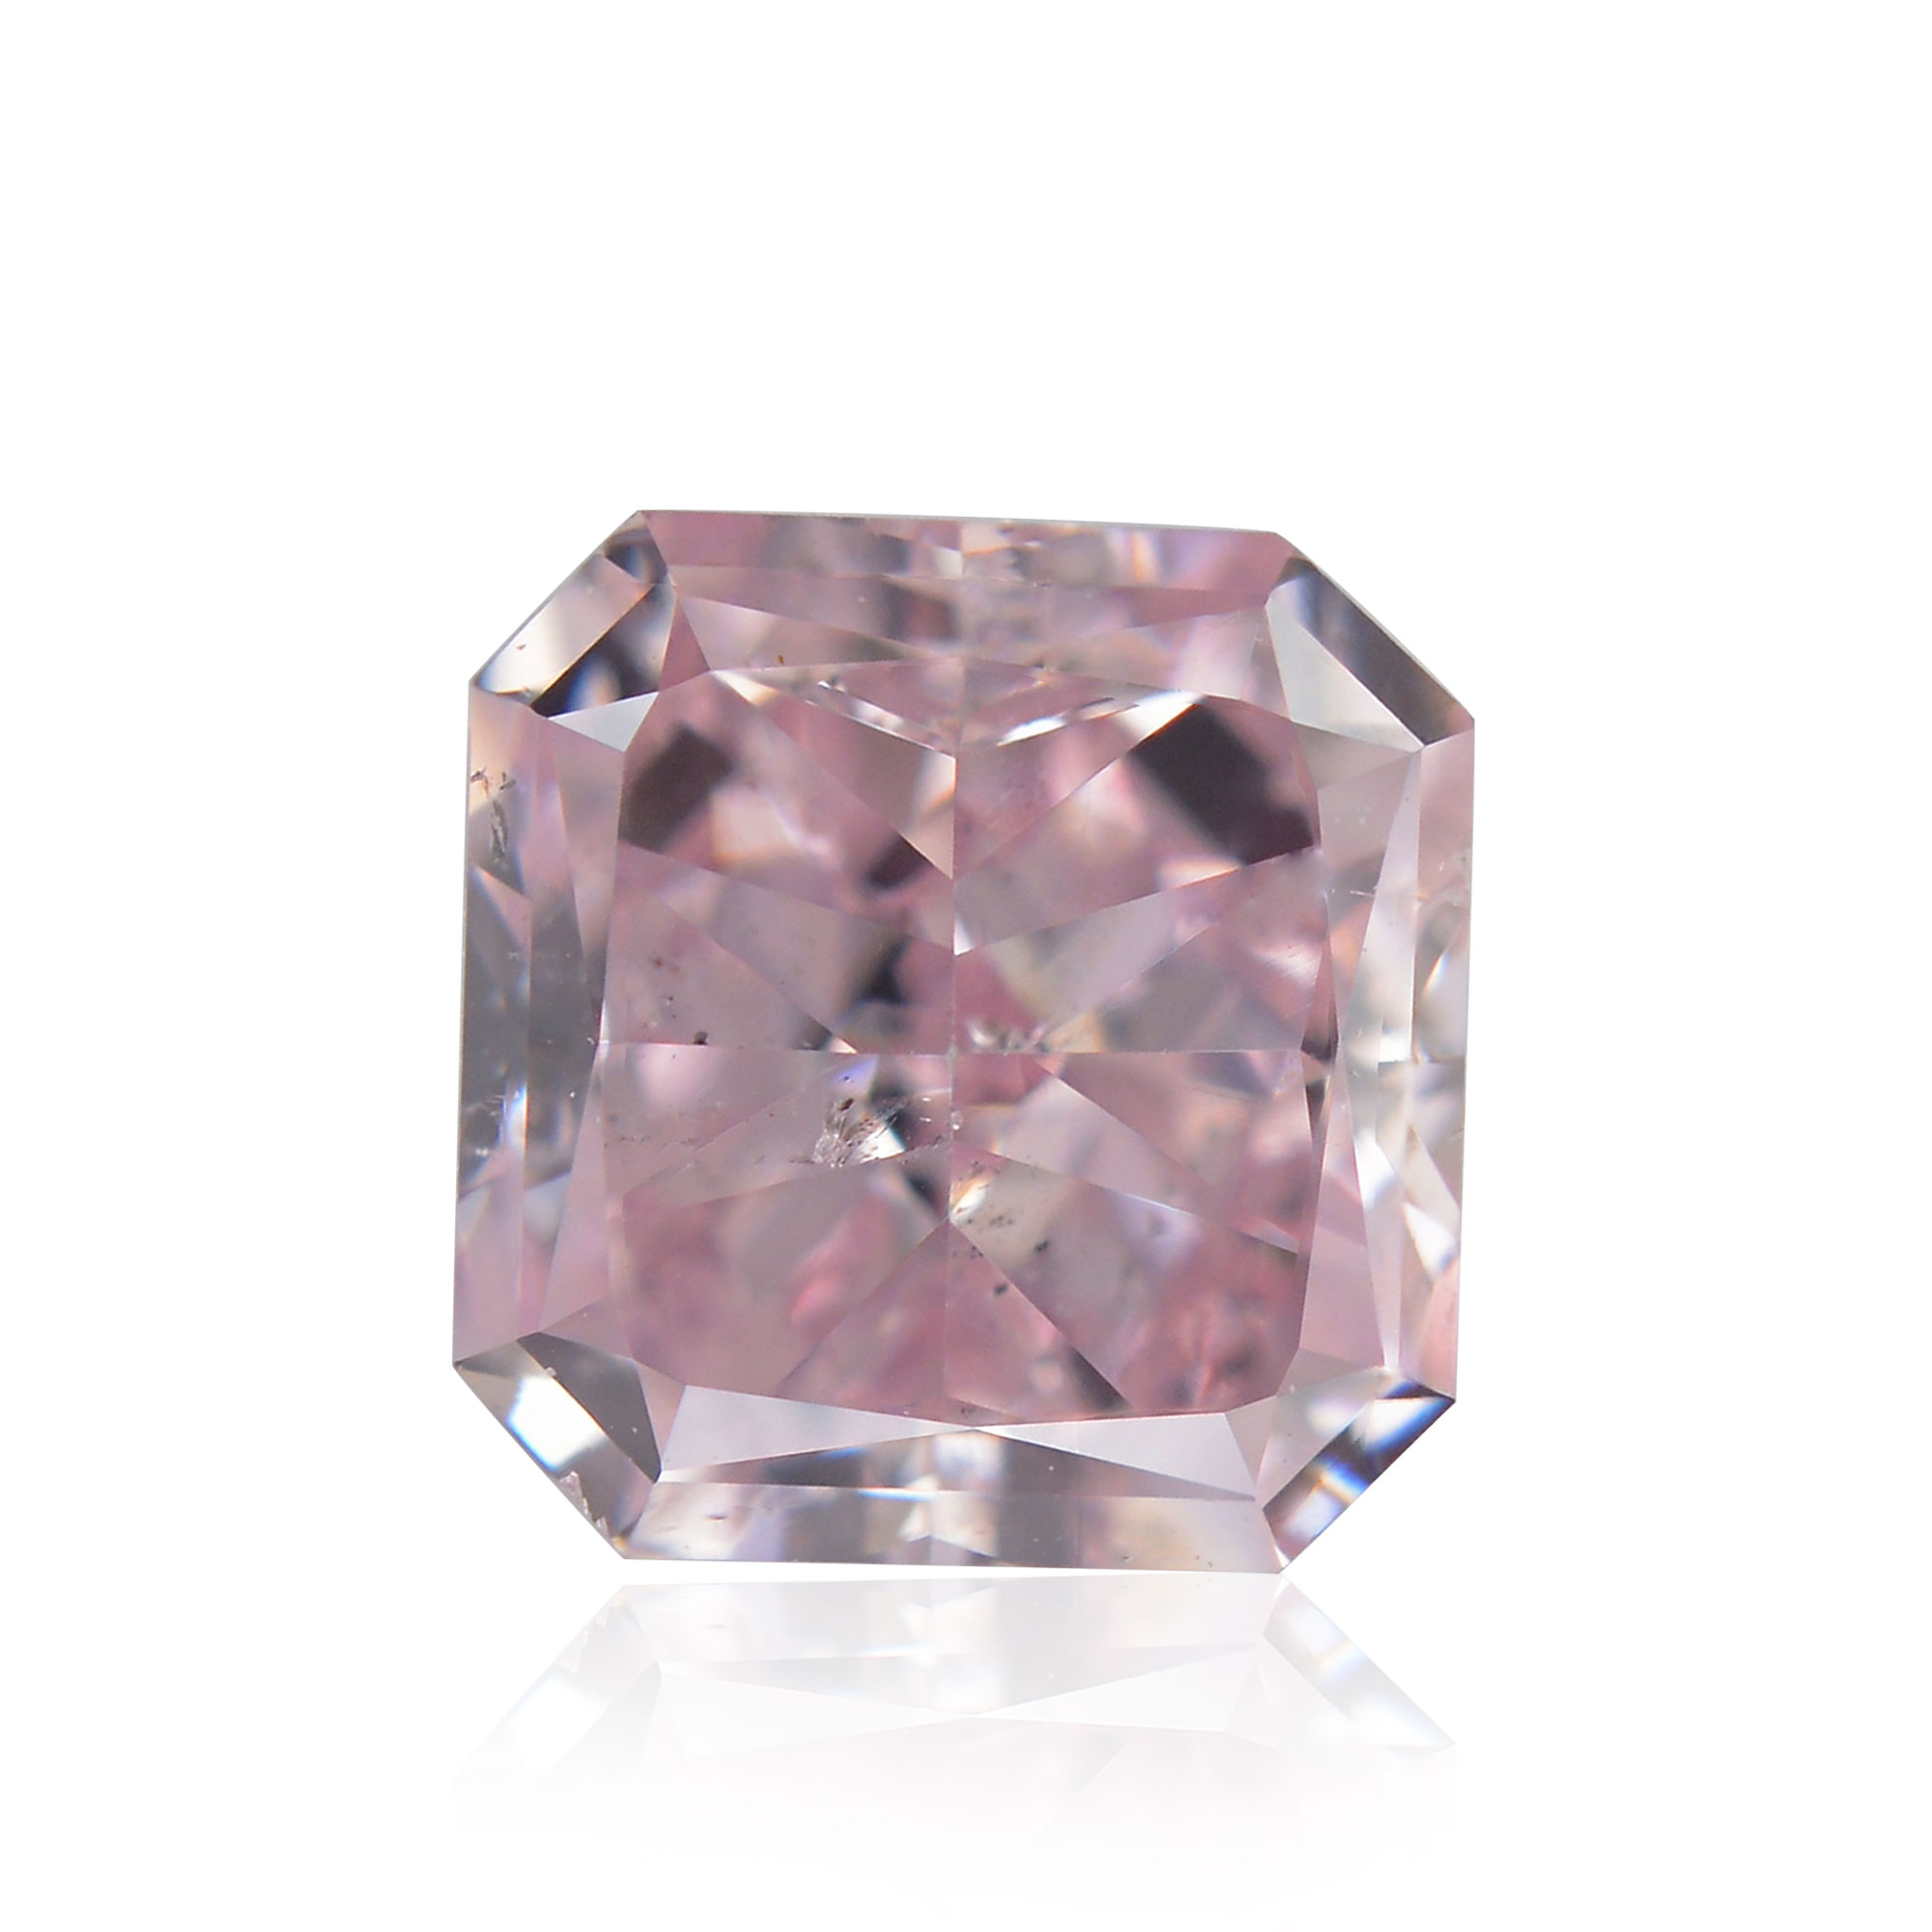 0.89 carat, Fancy Intense Purplish Pink Diamond, Radiant Shape, SI2  Clarity, GIA, SKU 319094